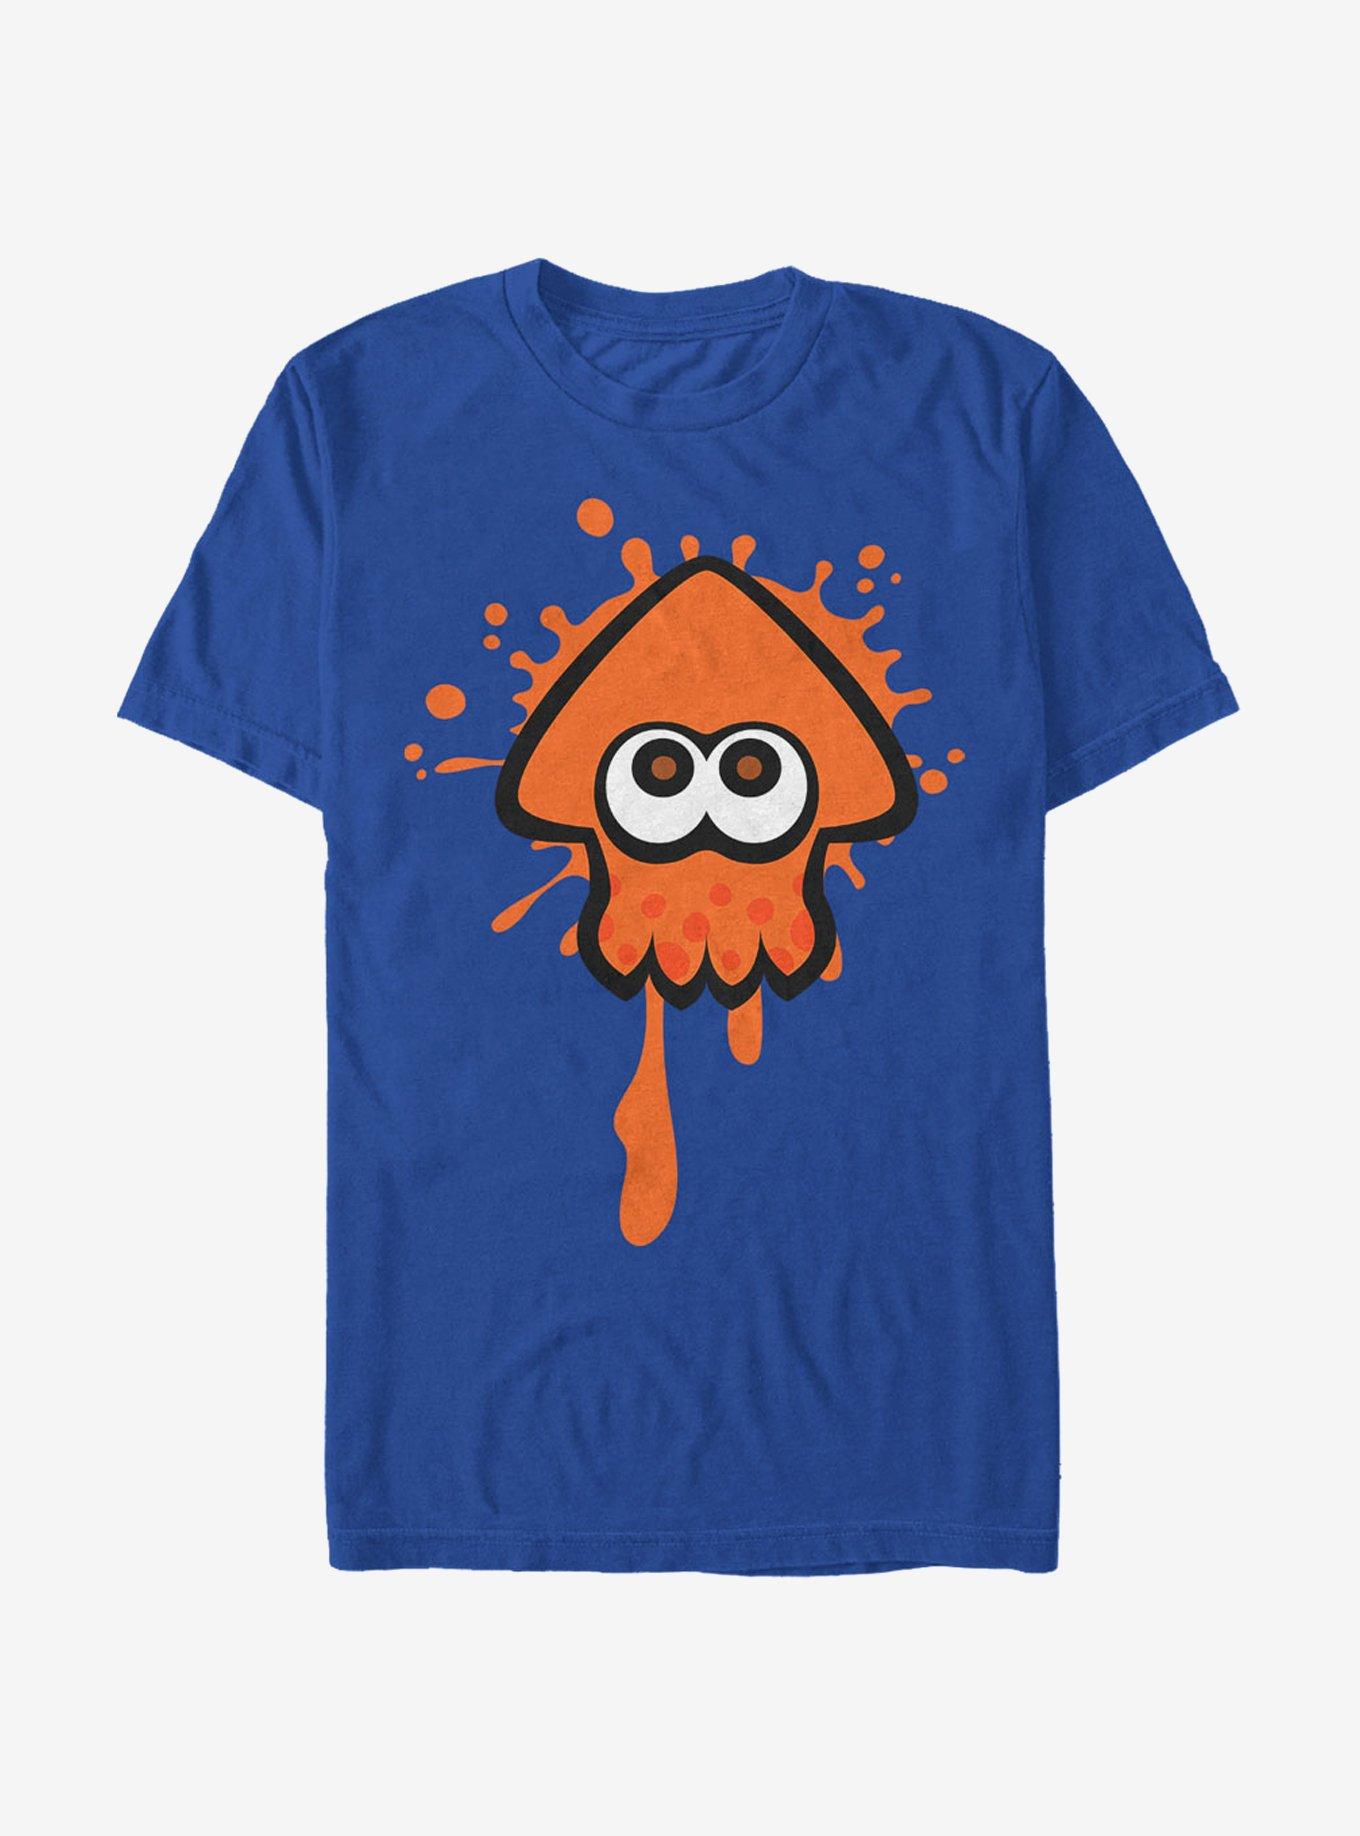 Nintendo Splatoon Orange Inkling Squid T-Shirt, ROYAL, hi-res